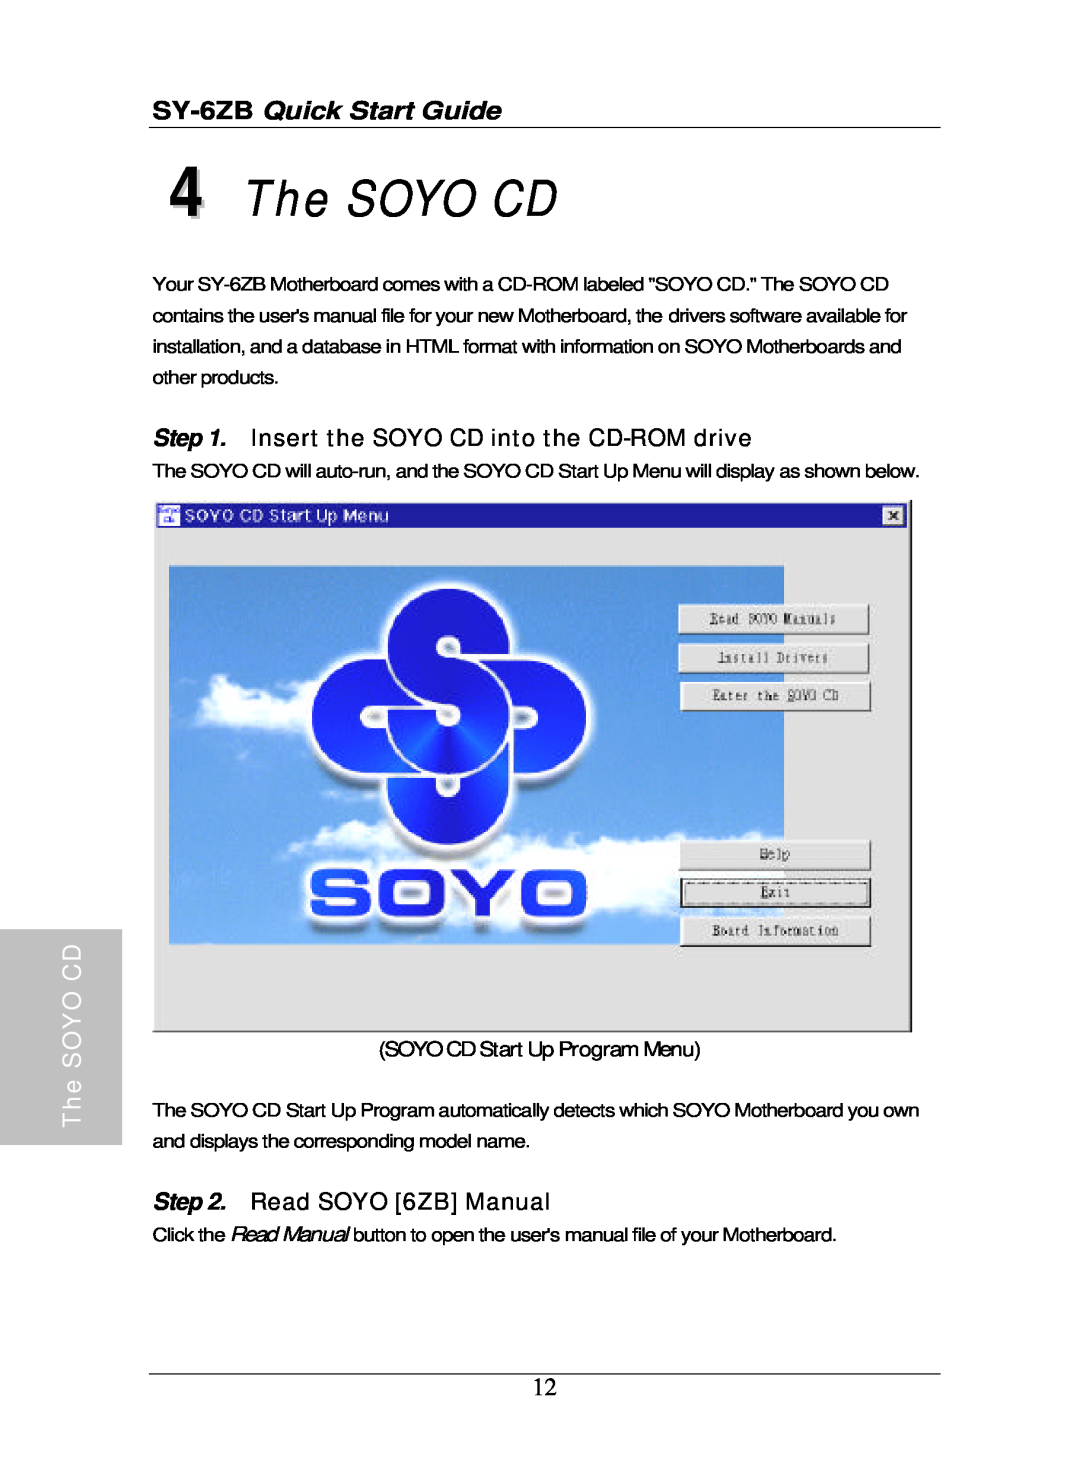 SOYO SY-6ZB The SOYO CD, Insert the SOYO CD into the CD-ROM drive, Read SOYO 6ZB Manual, SOYO CD Start Up Program Menu 